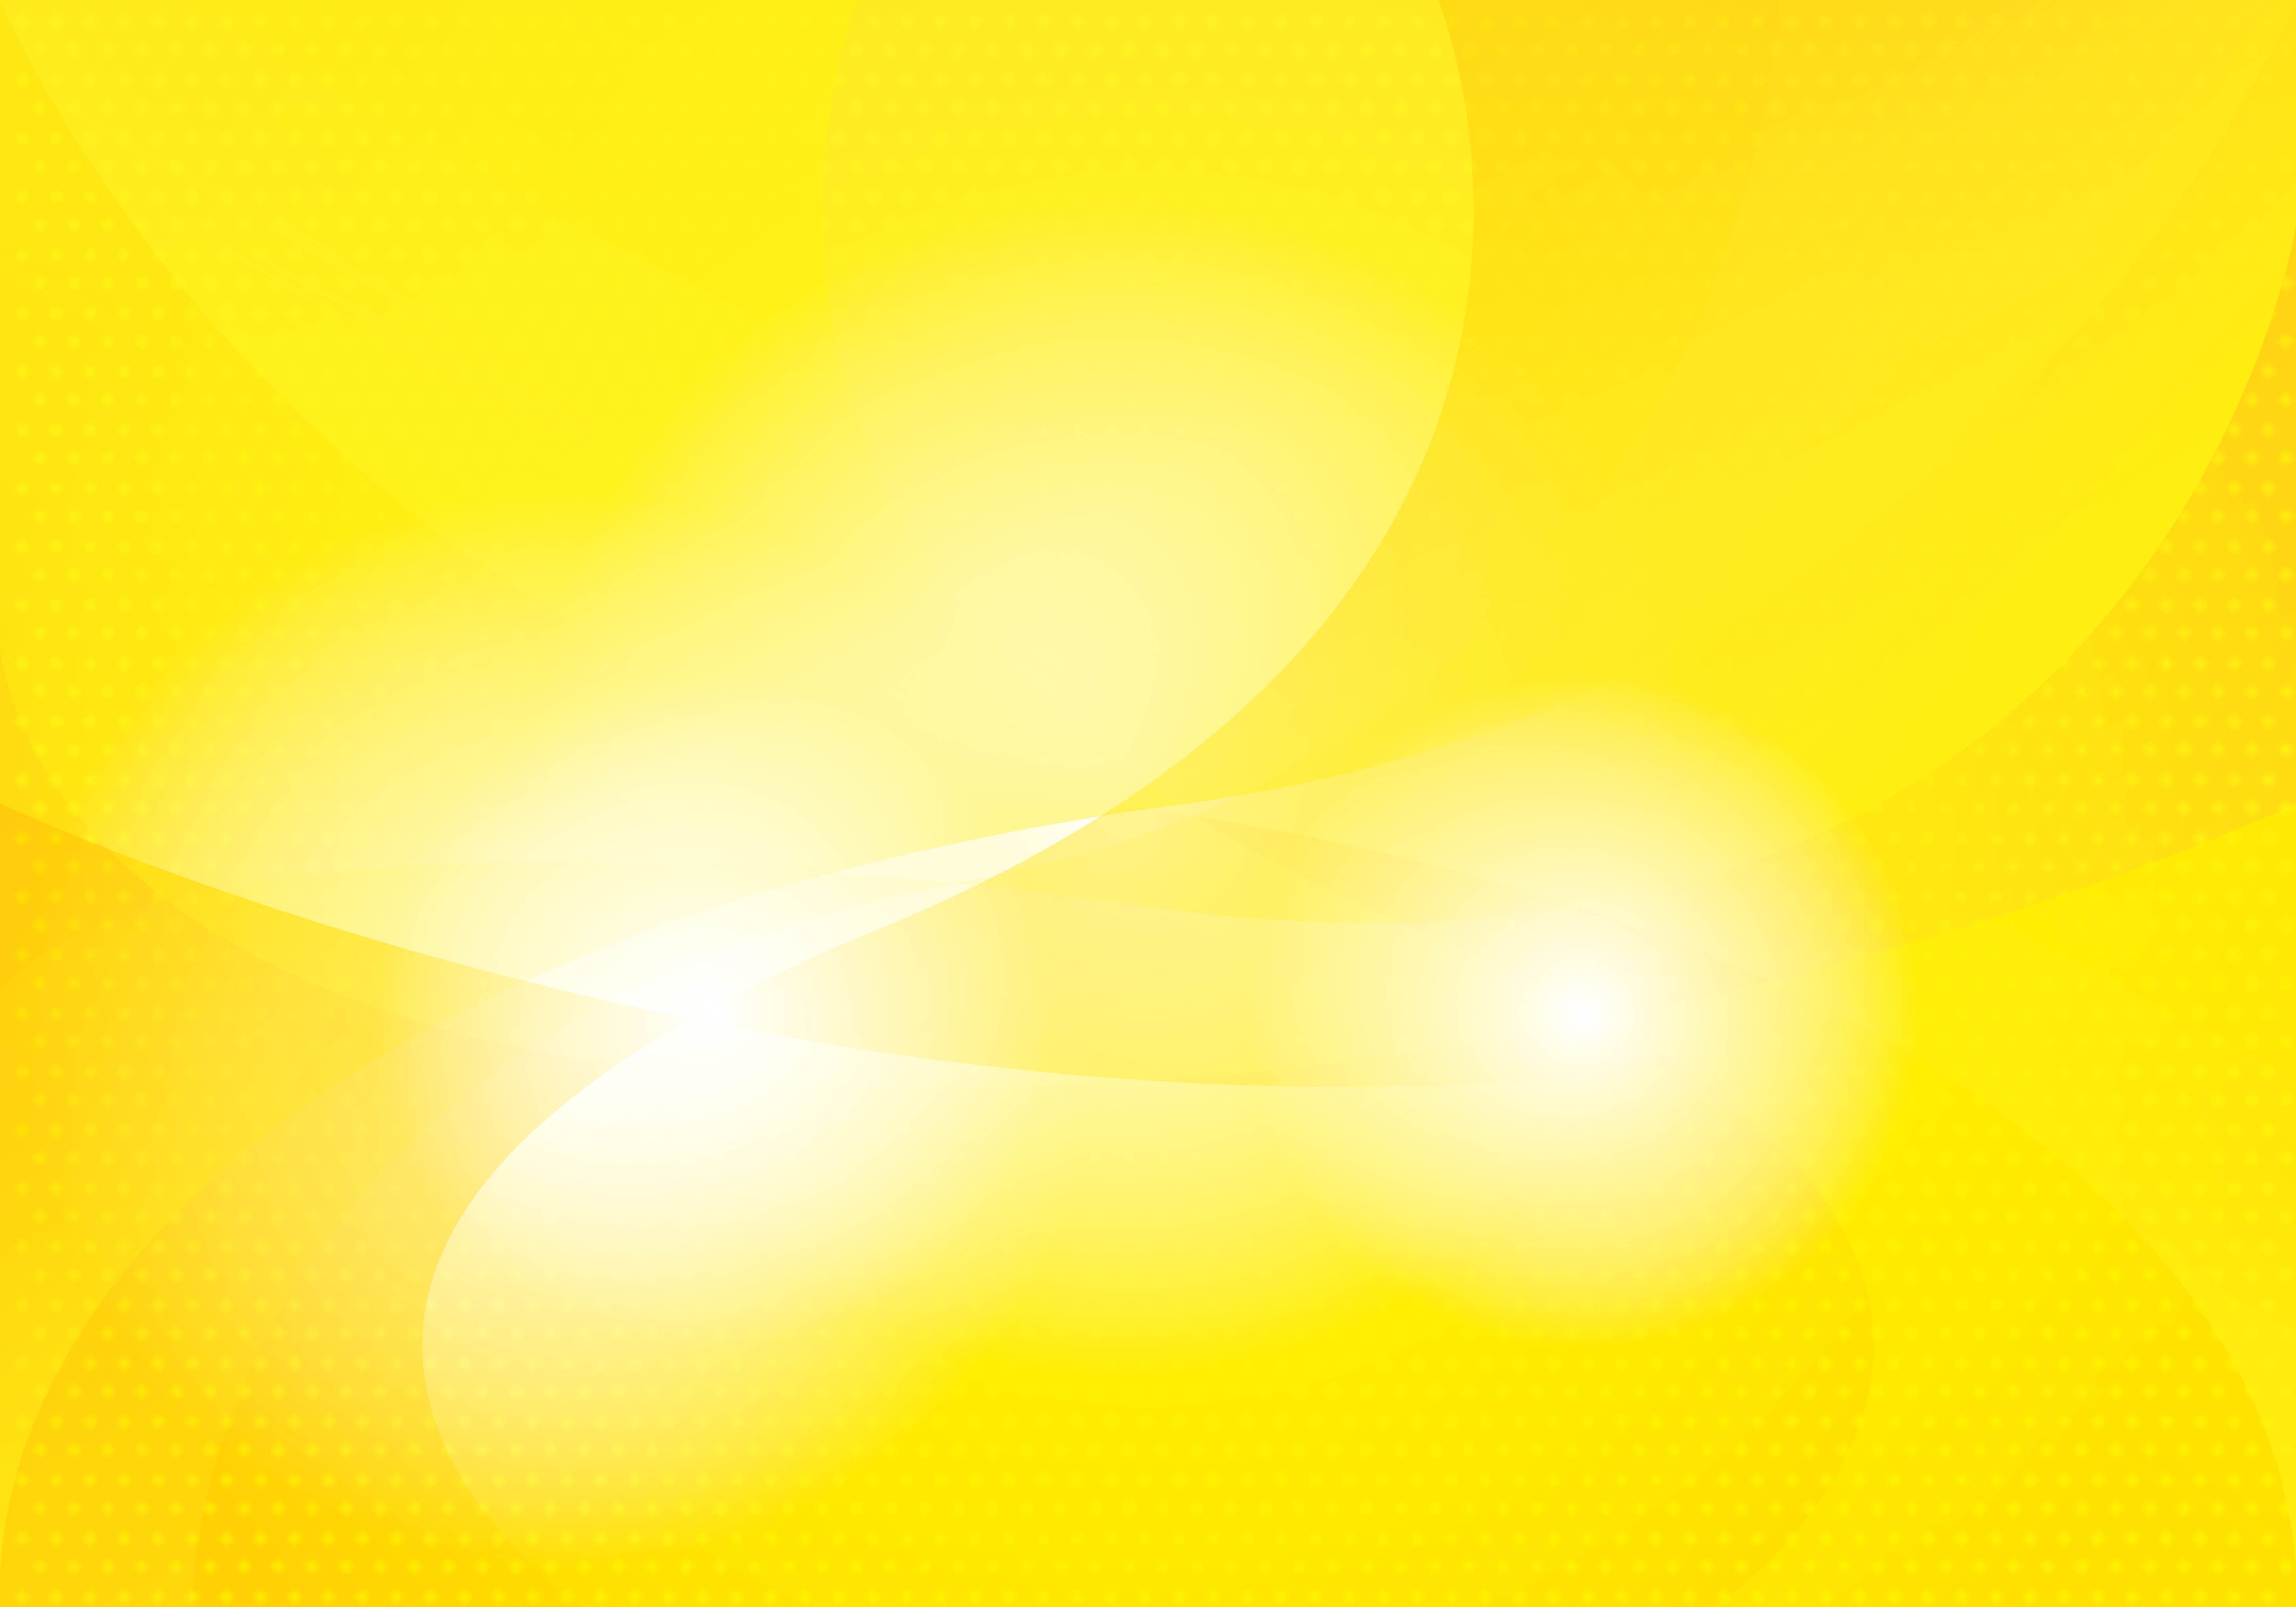 Light Yellow Background Free Vector Art - (22185 Free Downloads)